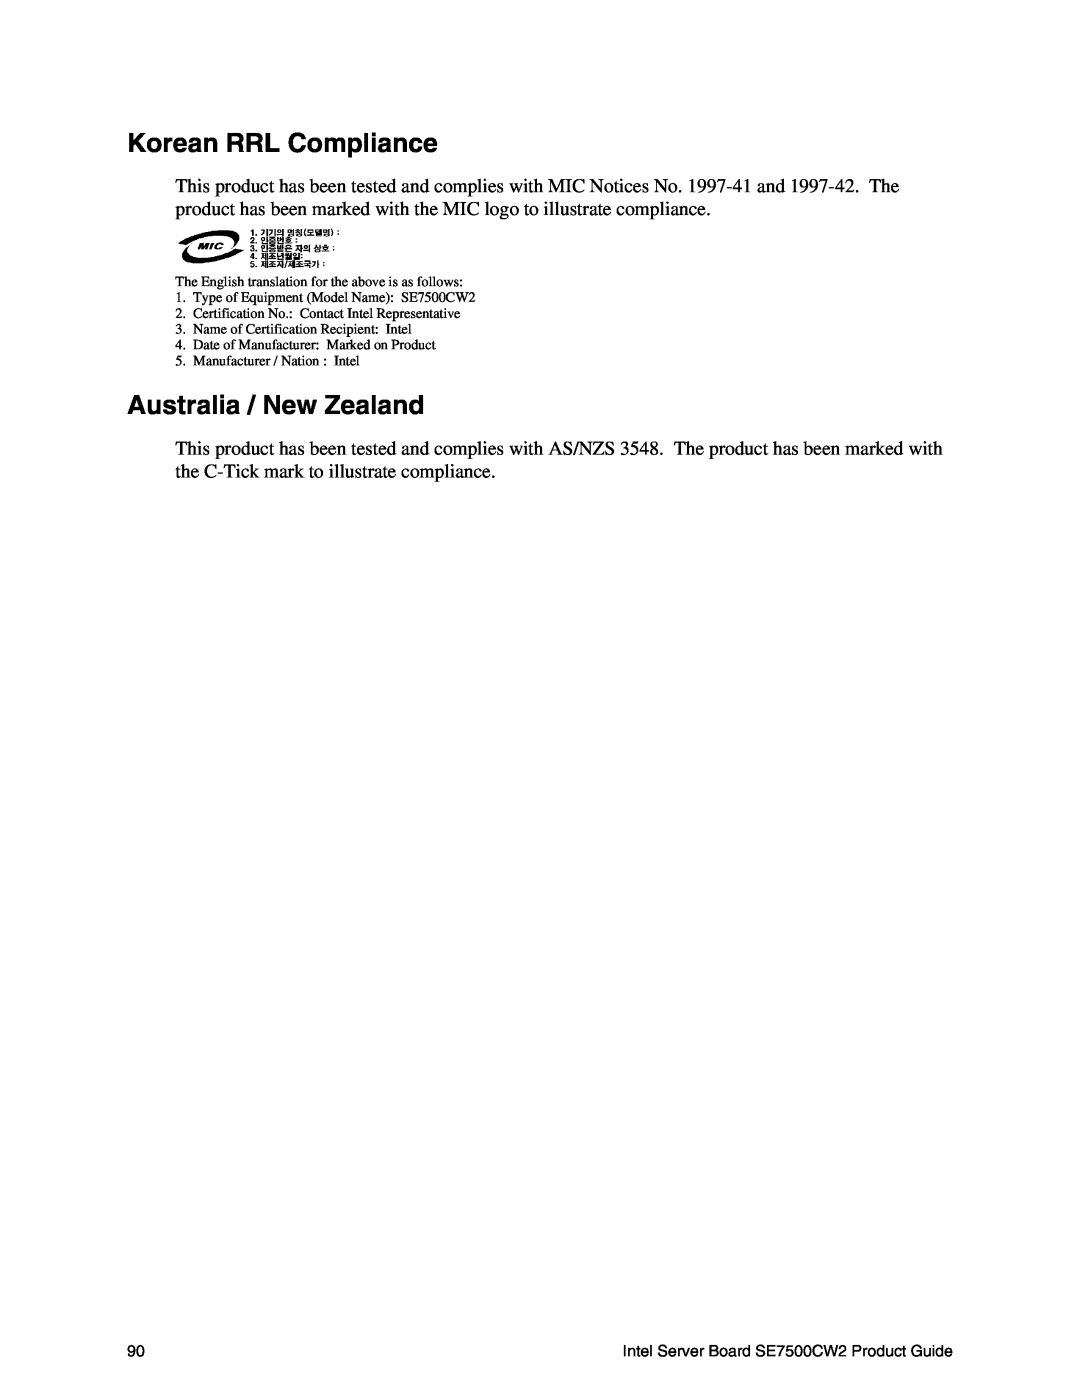 Intel manual Korean RRL Compliance, Australia / New Zealand, Intel Server Board SE7500CW2 Product Guide 